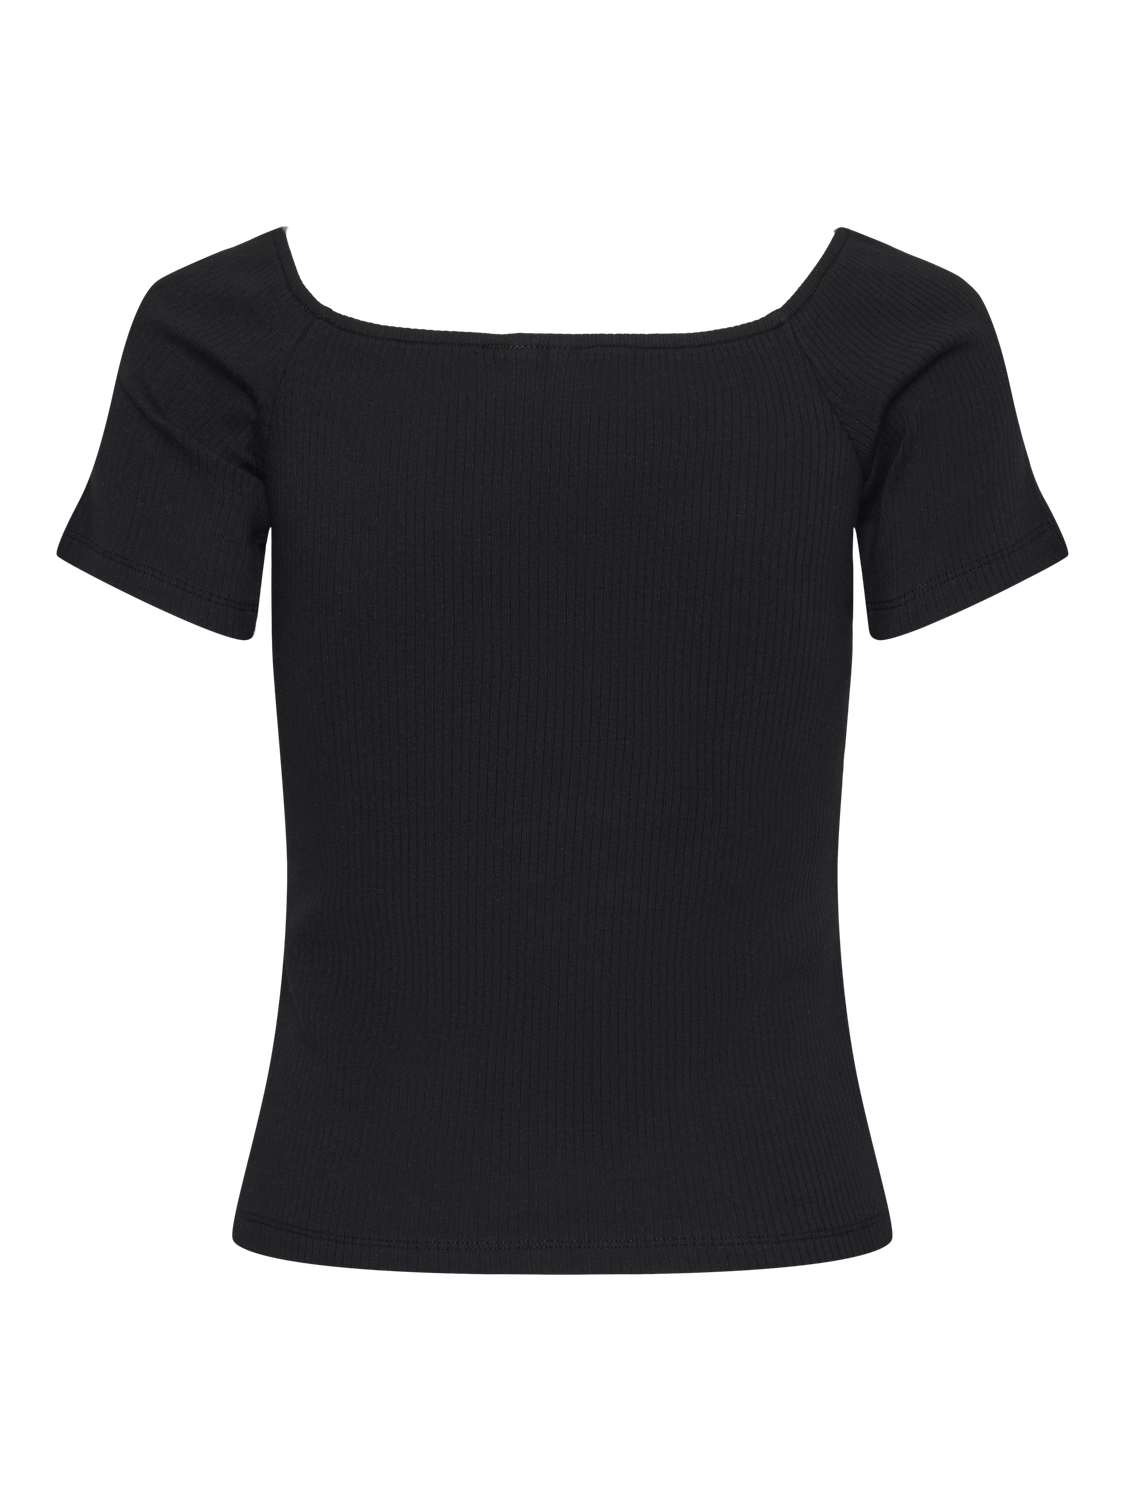 PCSYNA T-Shirts & Tops - Black